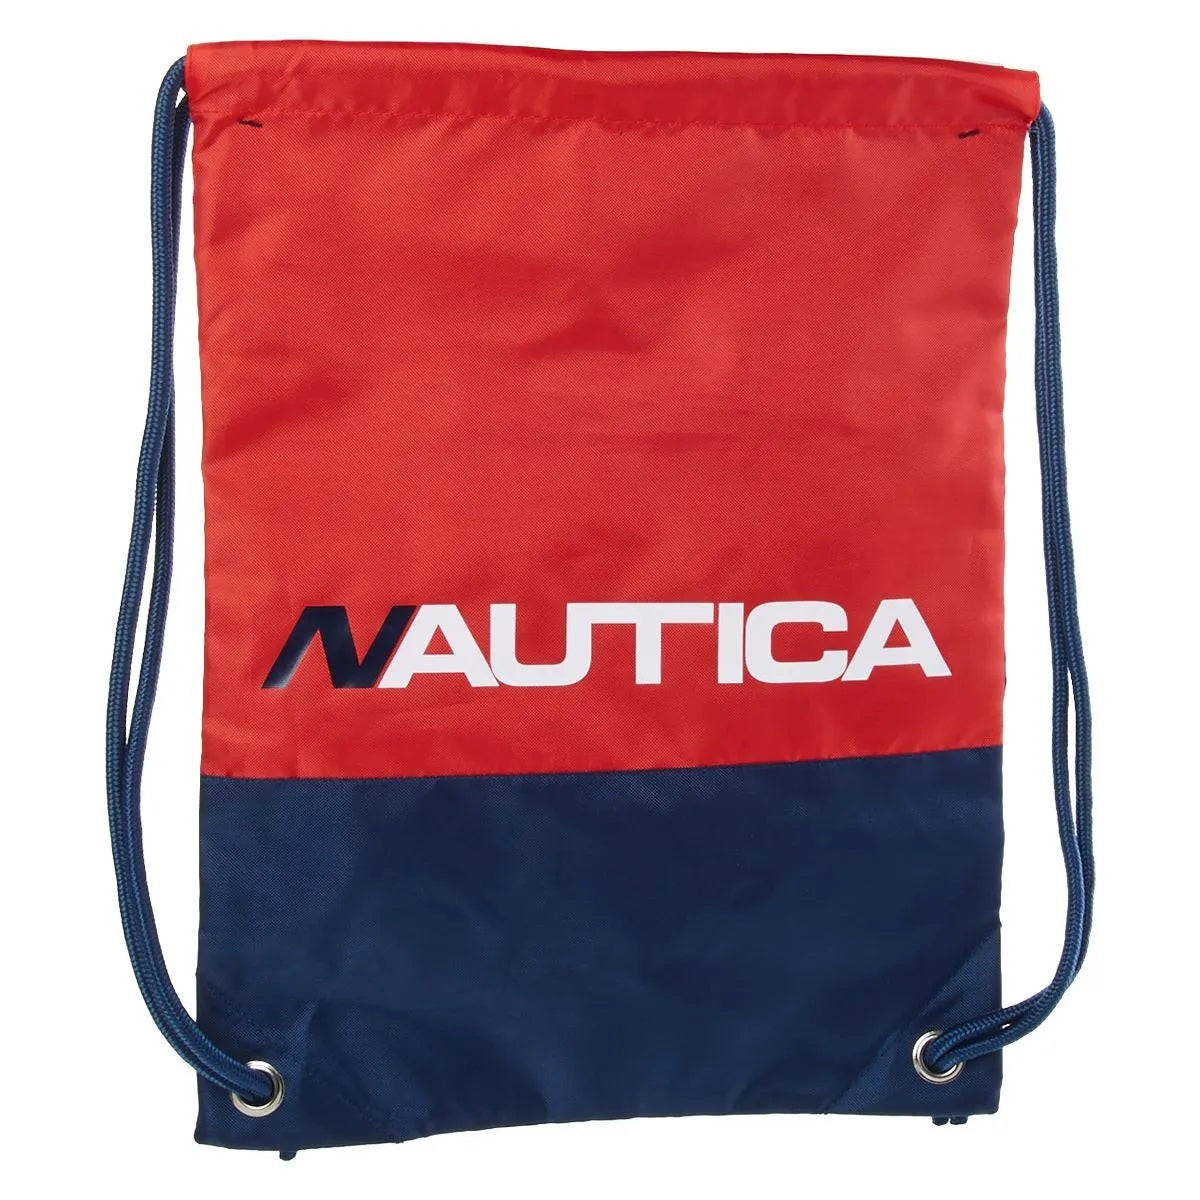 Nautica Drawstring Bag (RED/BLUE)